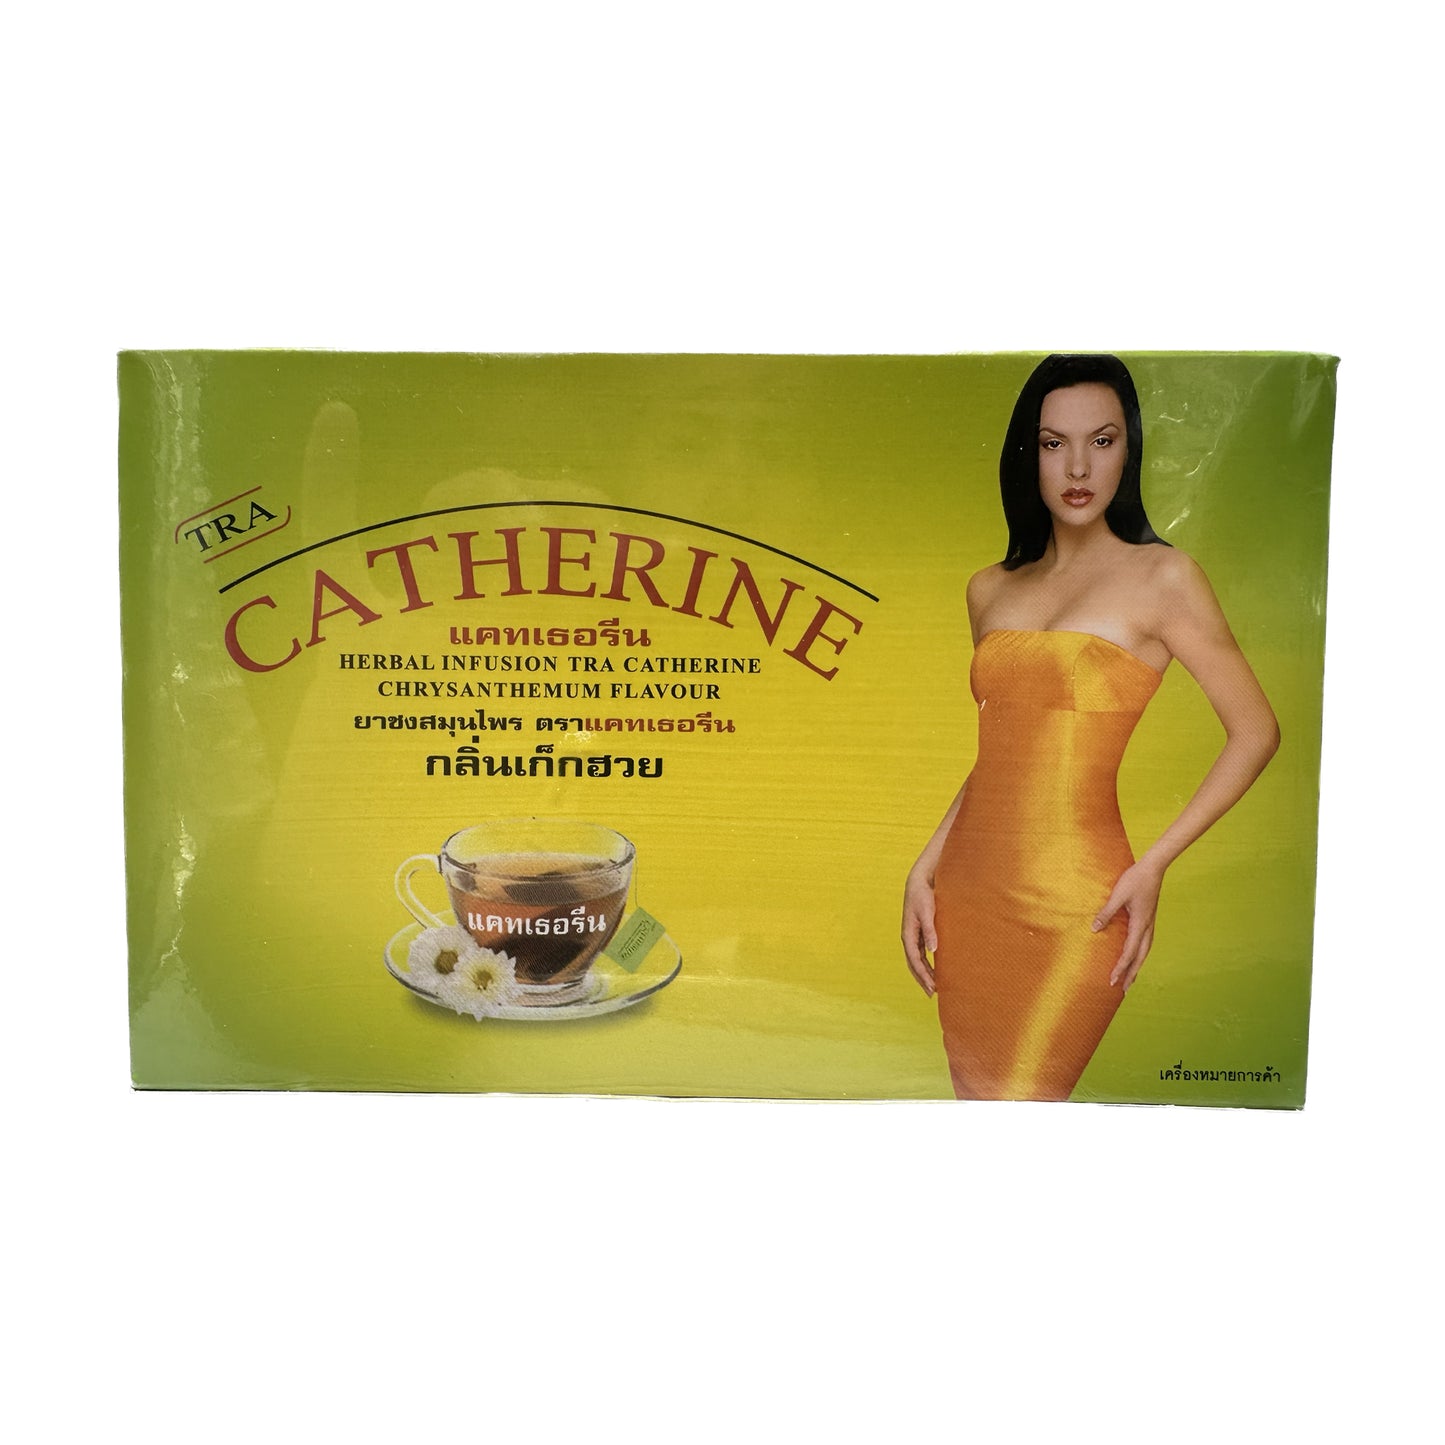 Catherine Chrysanthemum Slimming Weight Loss Thai Tea ชาตราแคทเธอรีน กลิ่นเก็กฮวย